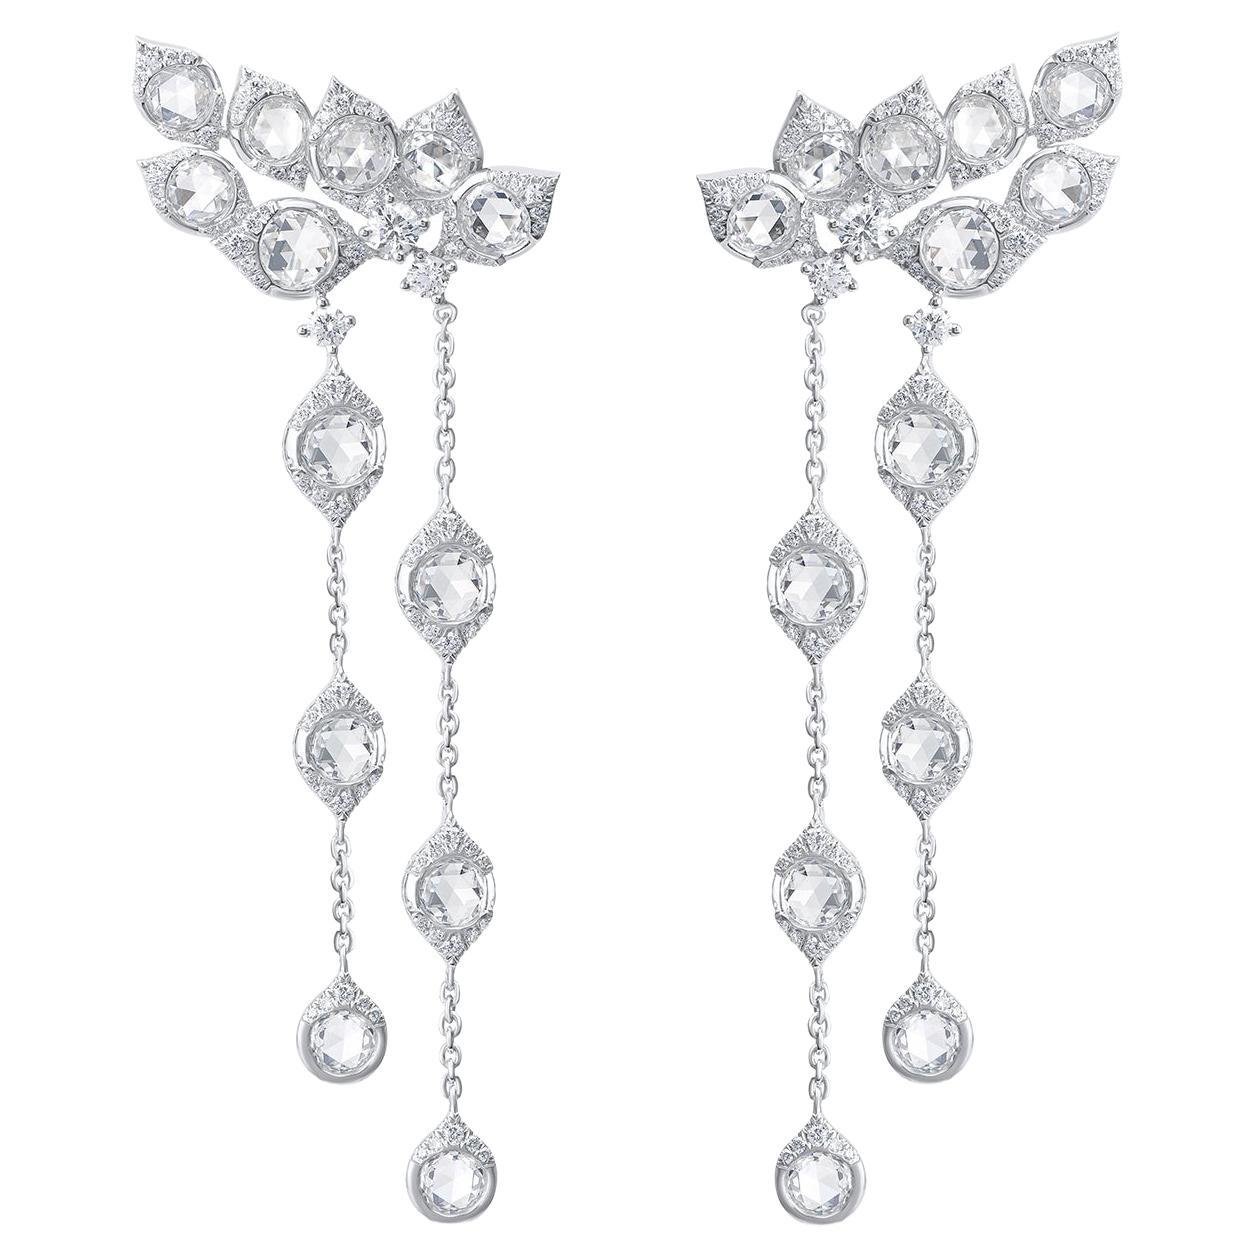 Harakh Colorless Diamond 3.25 Carat Dangling Earrings in 18 KT White Gold